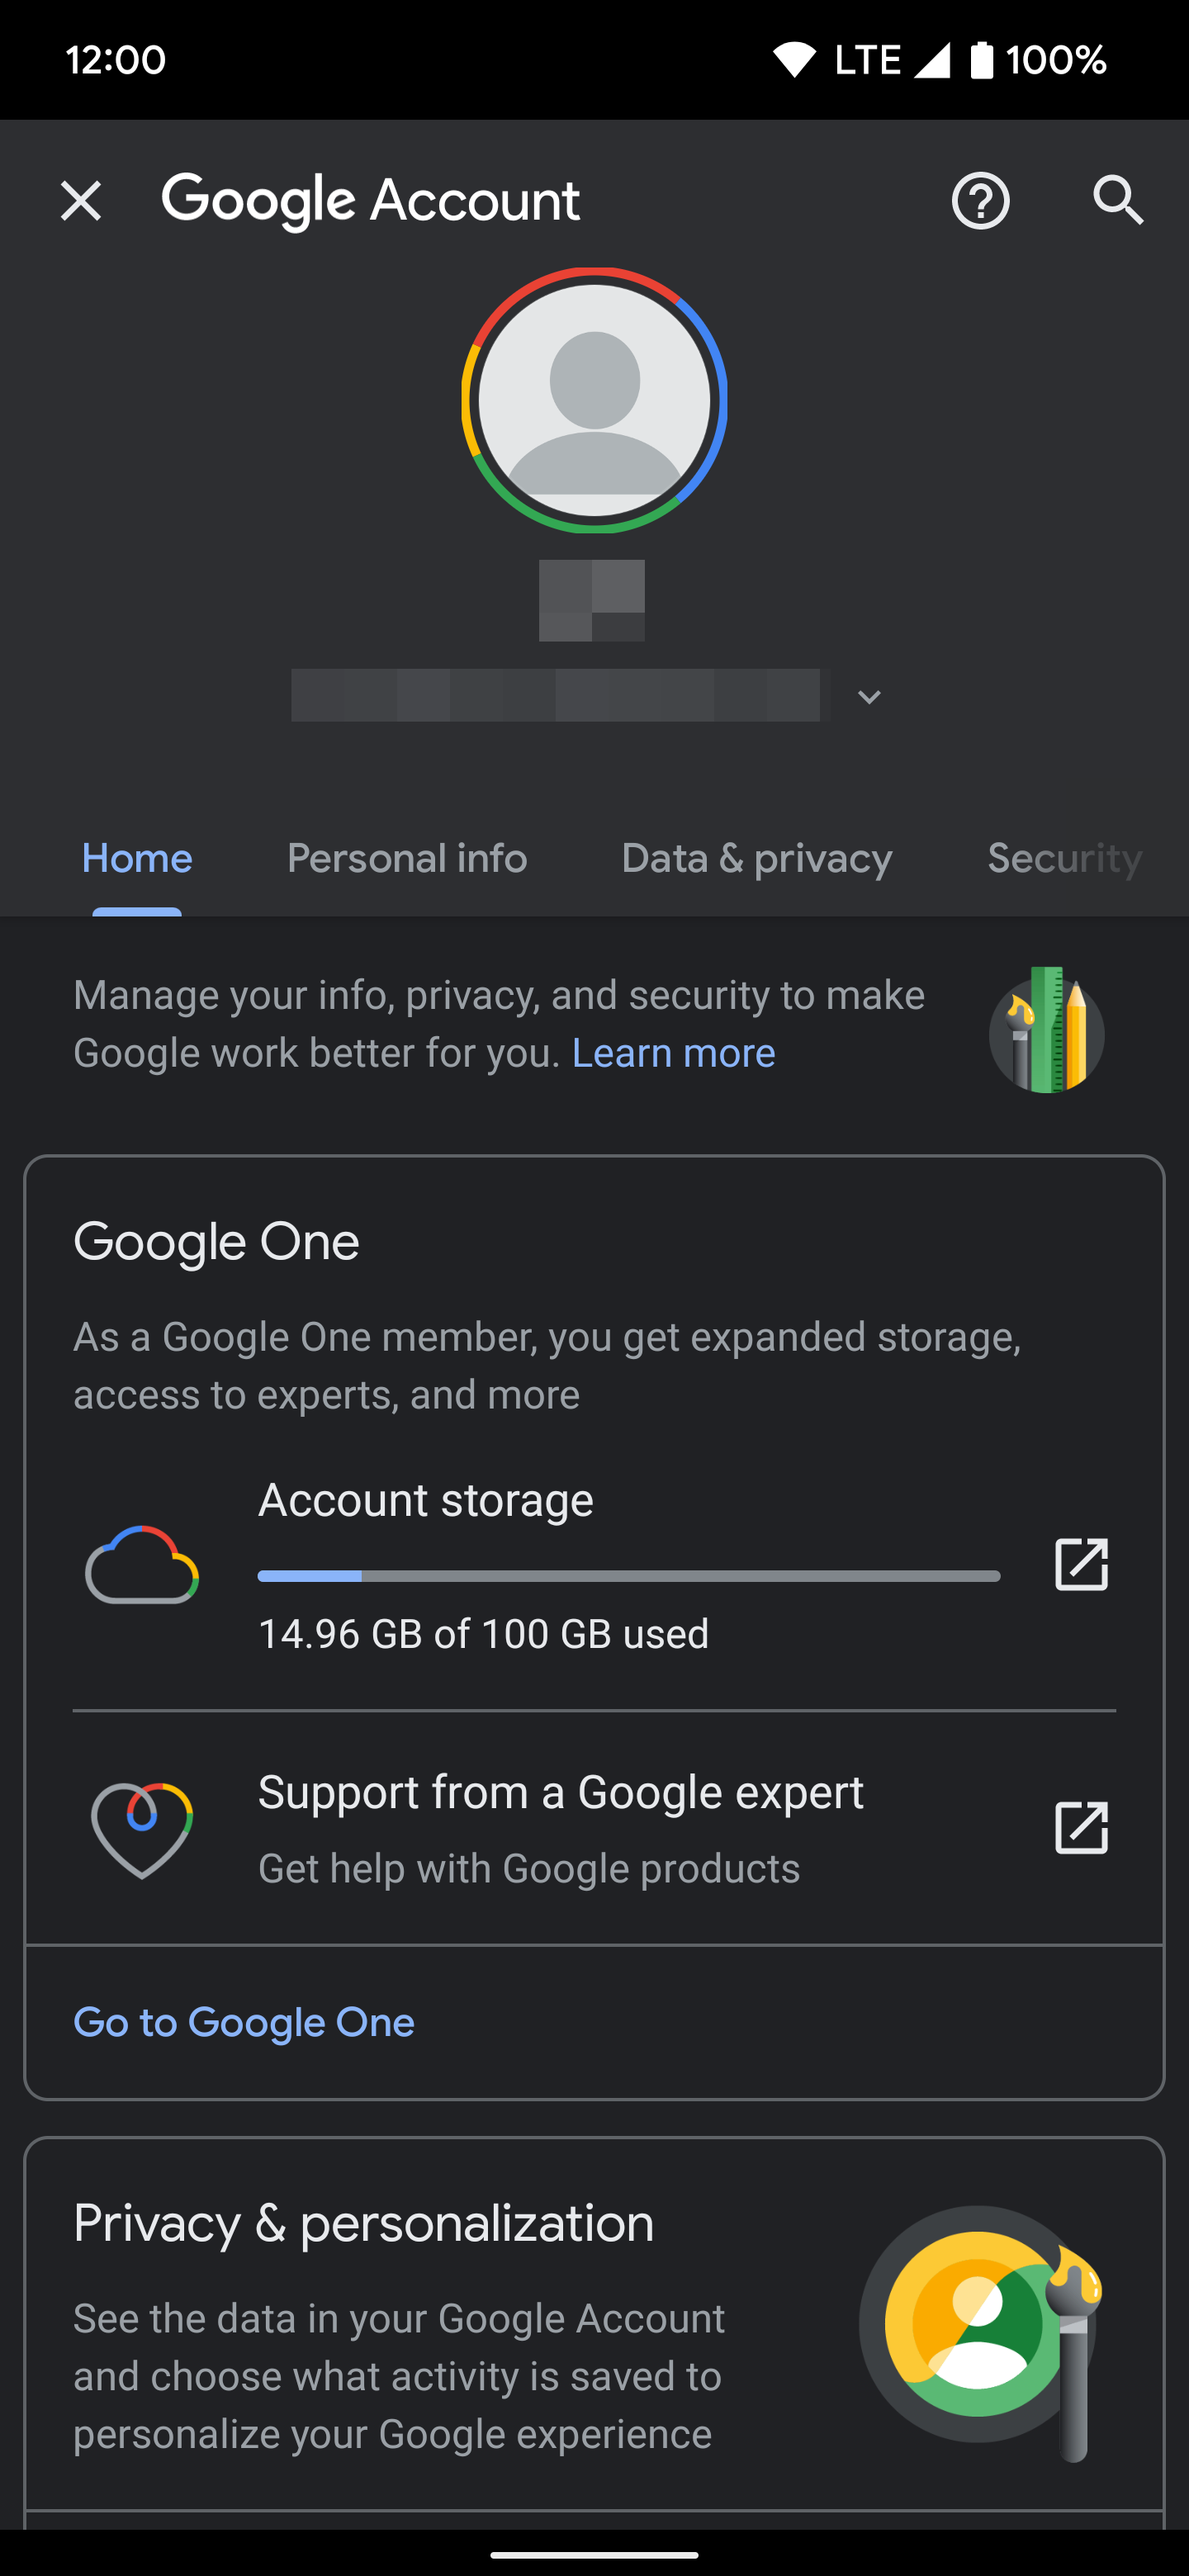 Google Account settings page screenshot